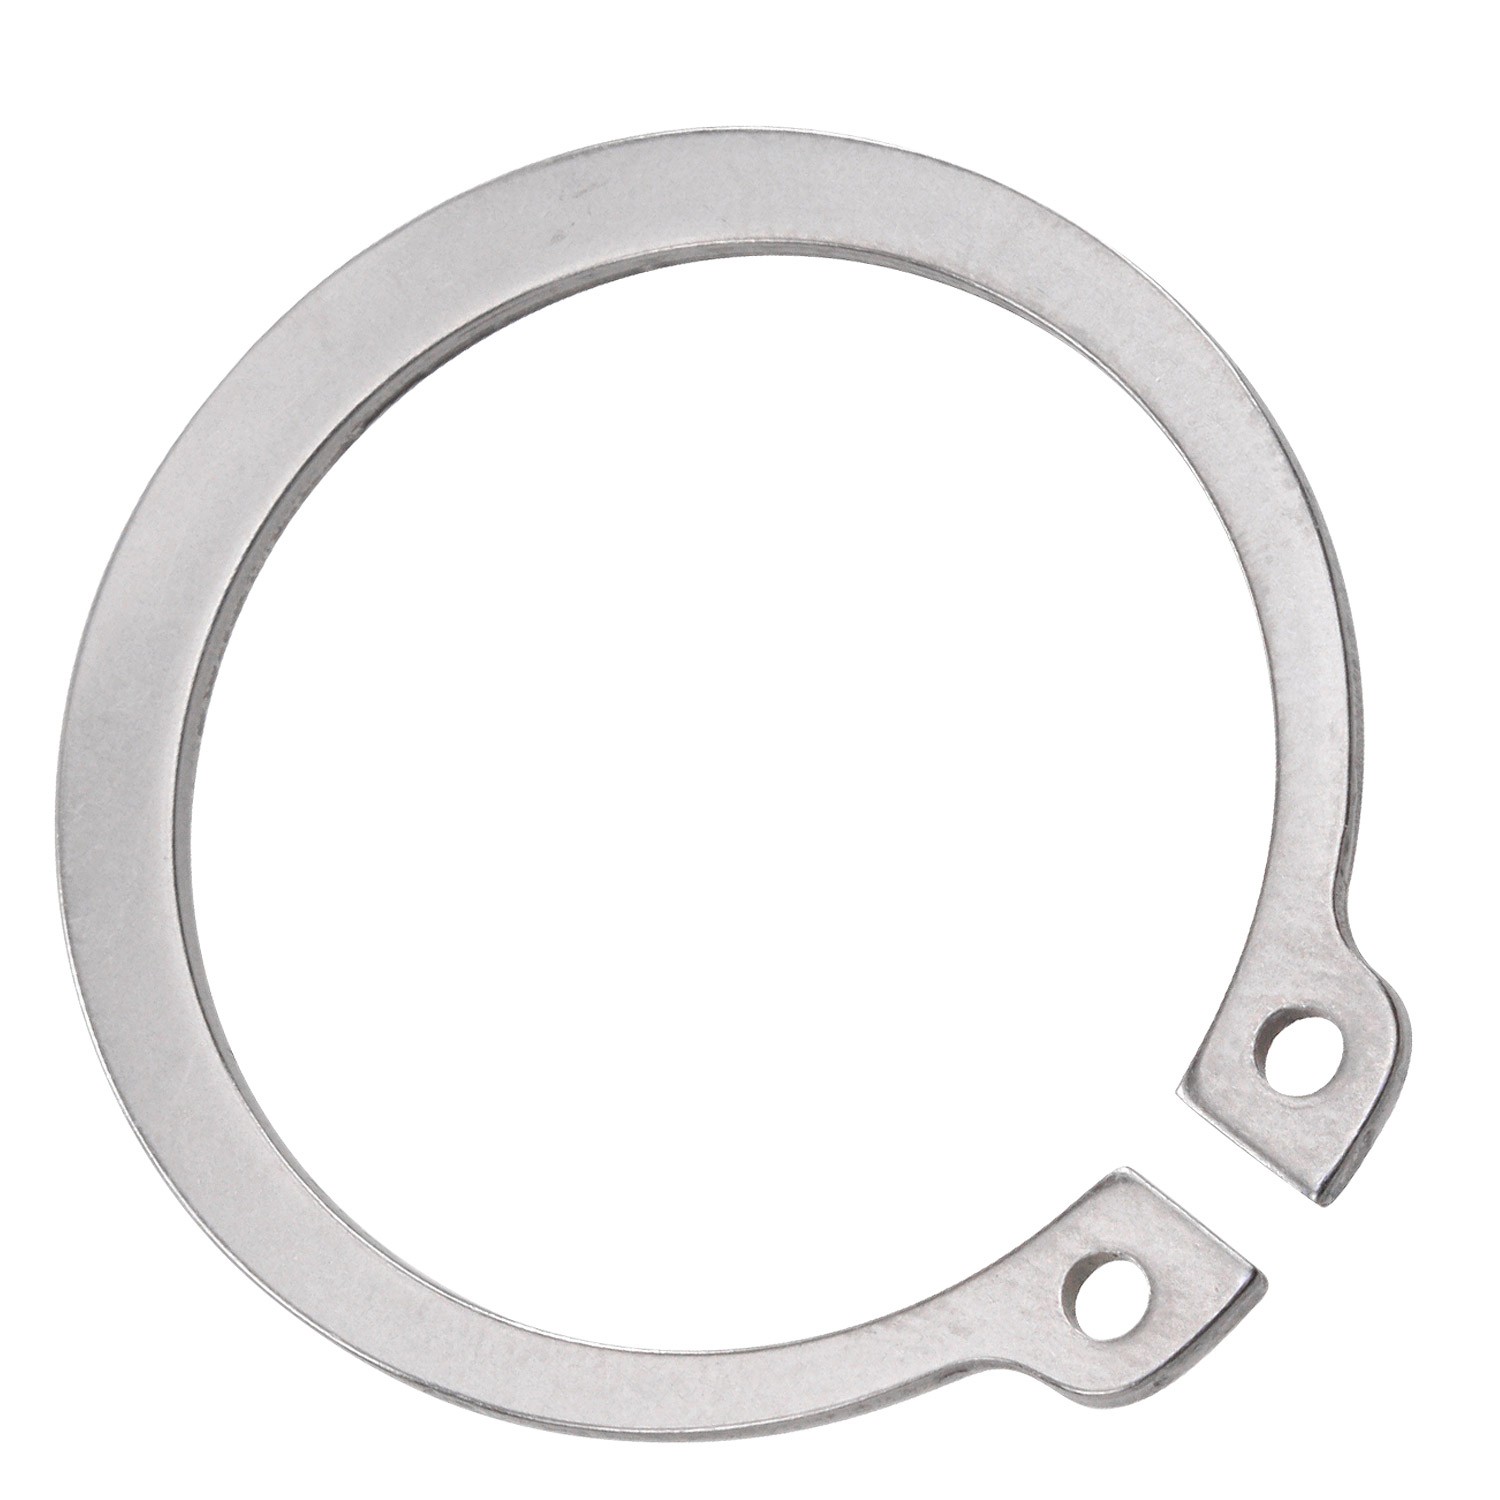 Кольцо стопорное наружное 10х1 DIN 471, нержавеющая сталь A4 - фото